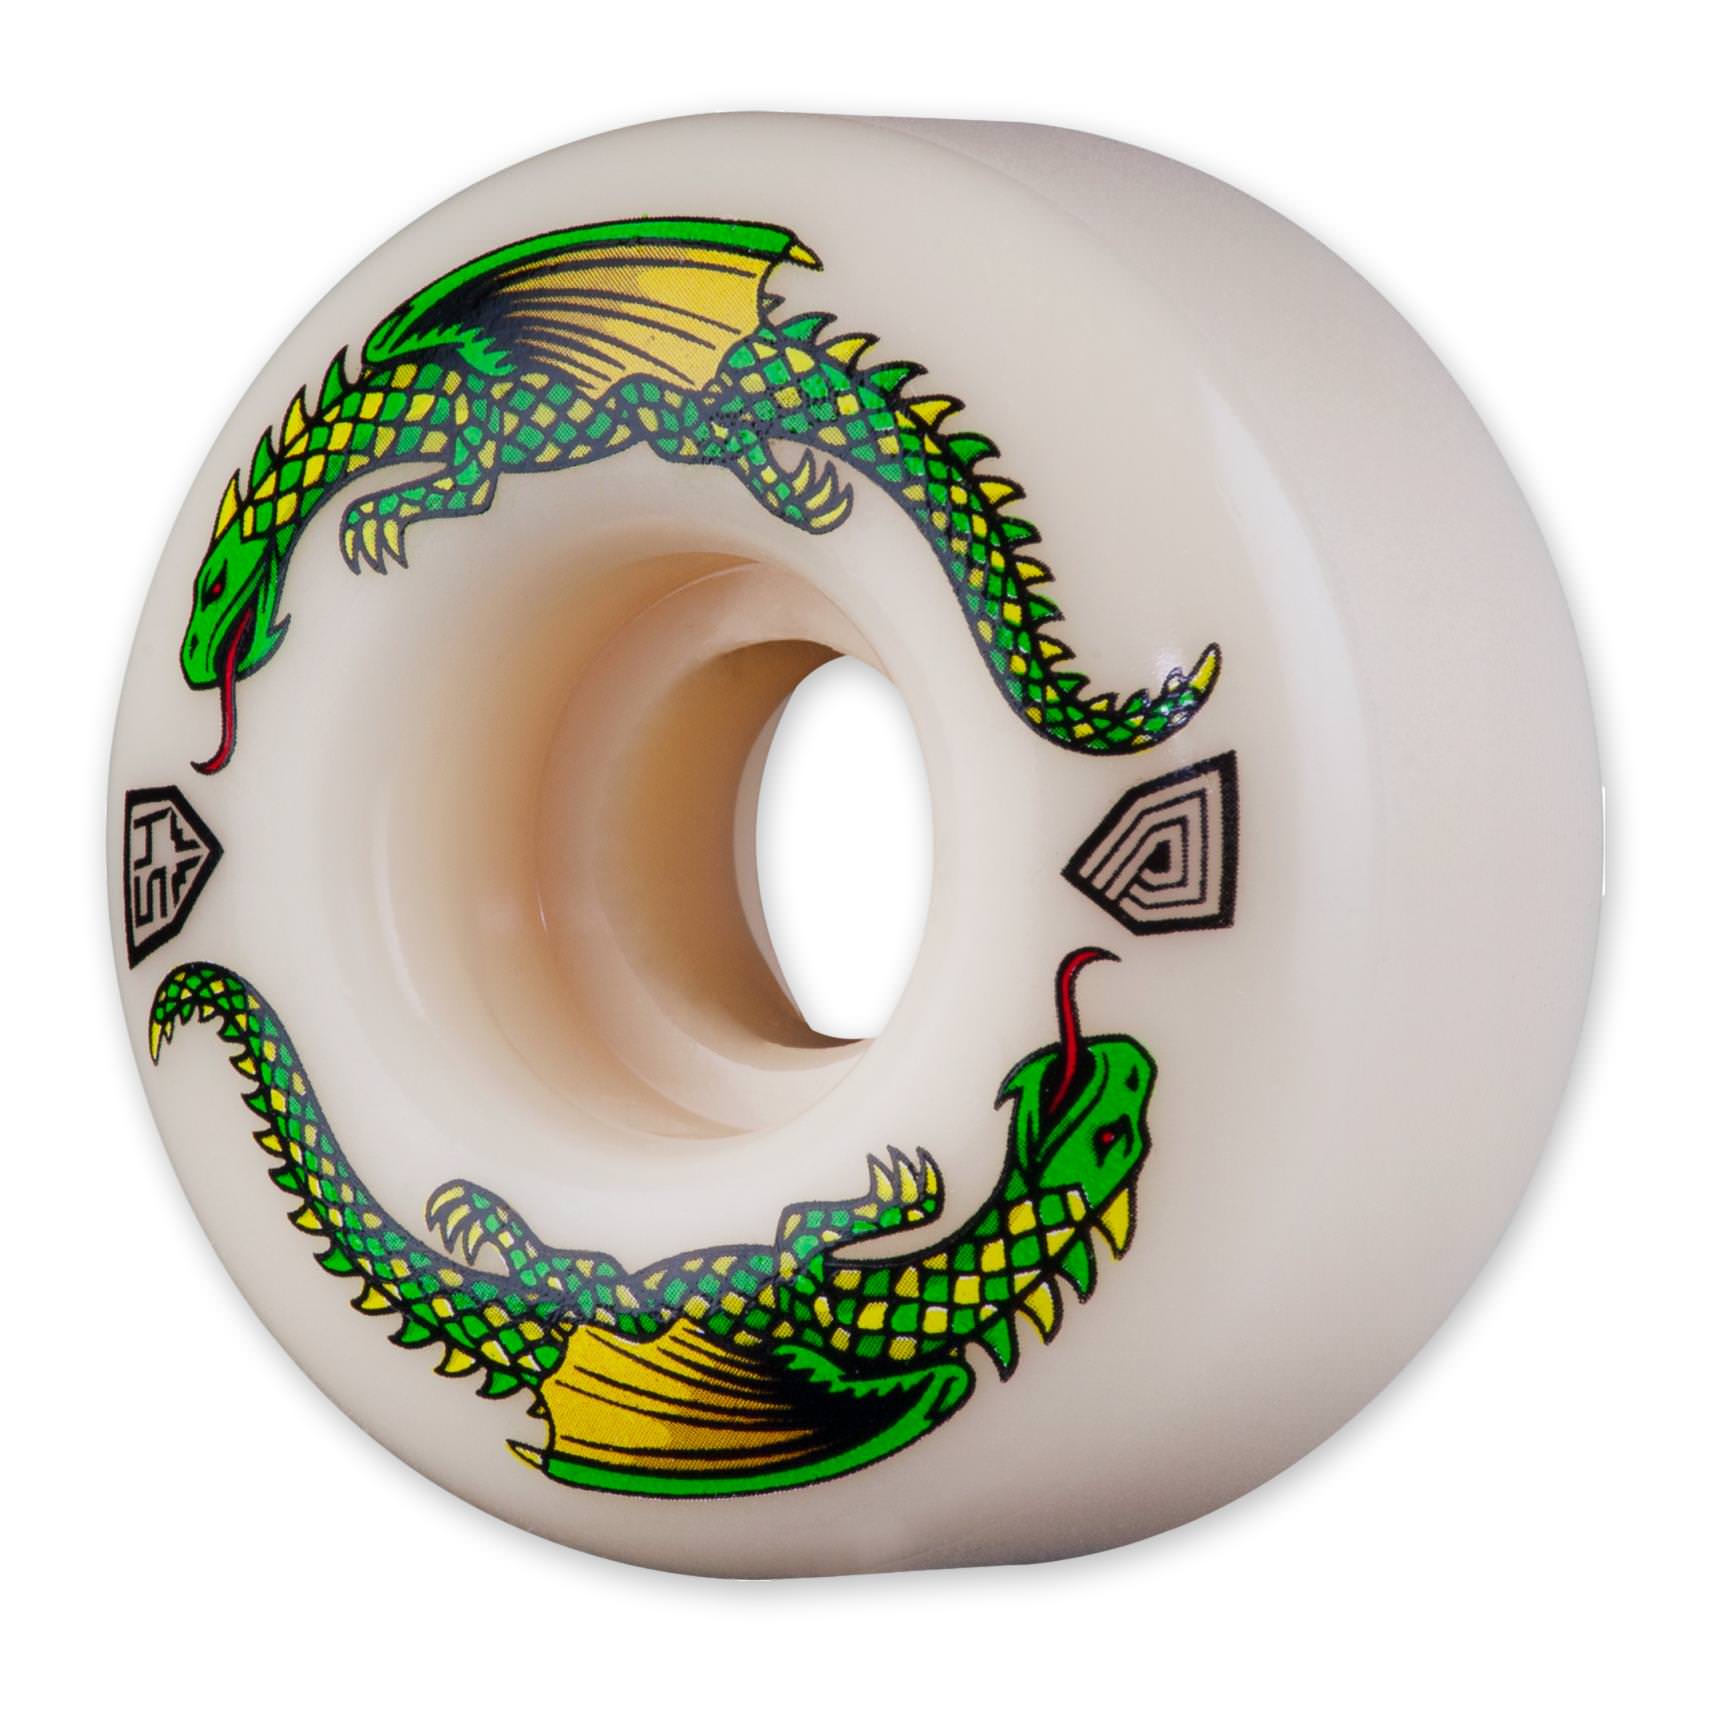 Powell-Peralta Dragon Formula Green Dragon Skateboard Wheels (4 Wheels)